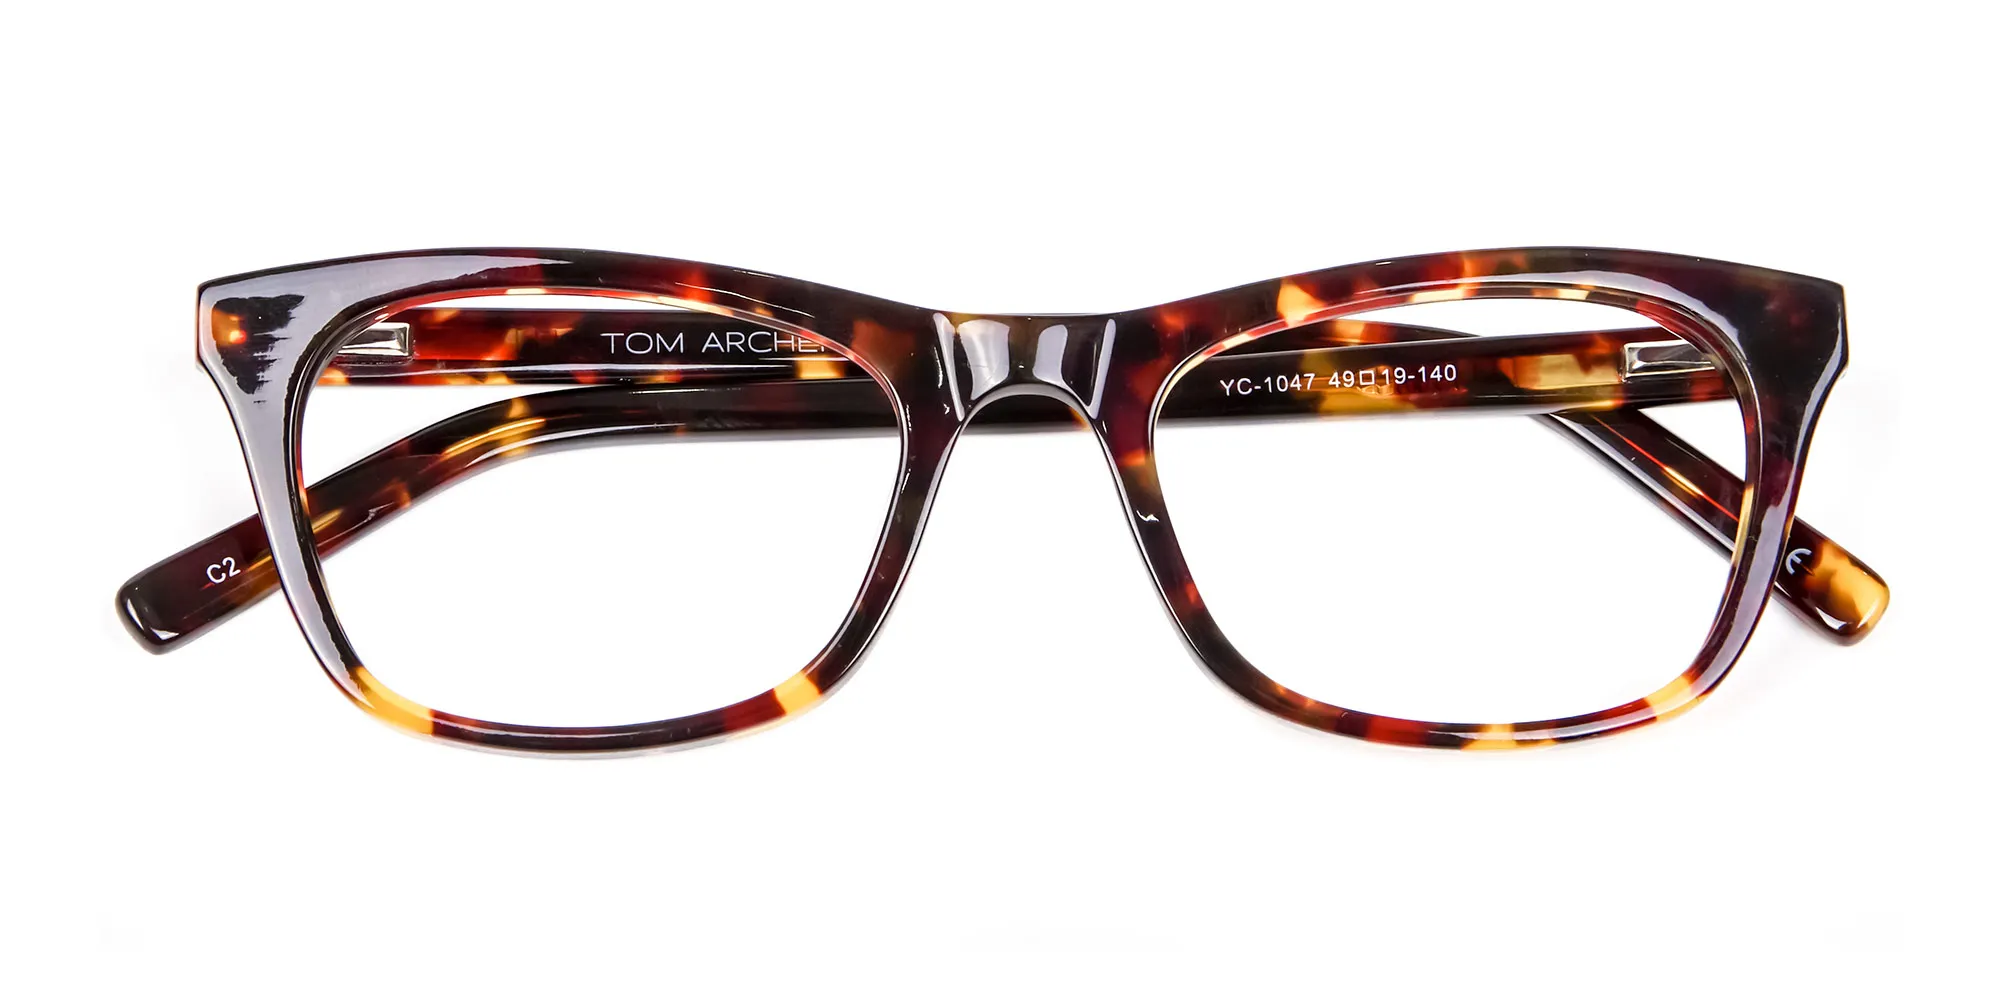 Warm-toned Tortoiseshell Glasses in Cat Eye Style - 1